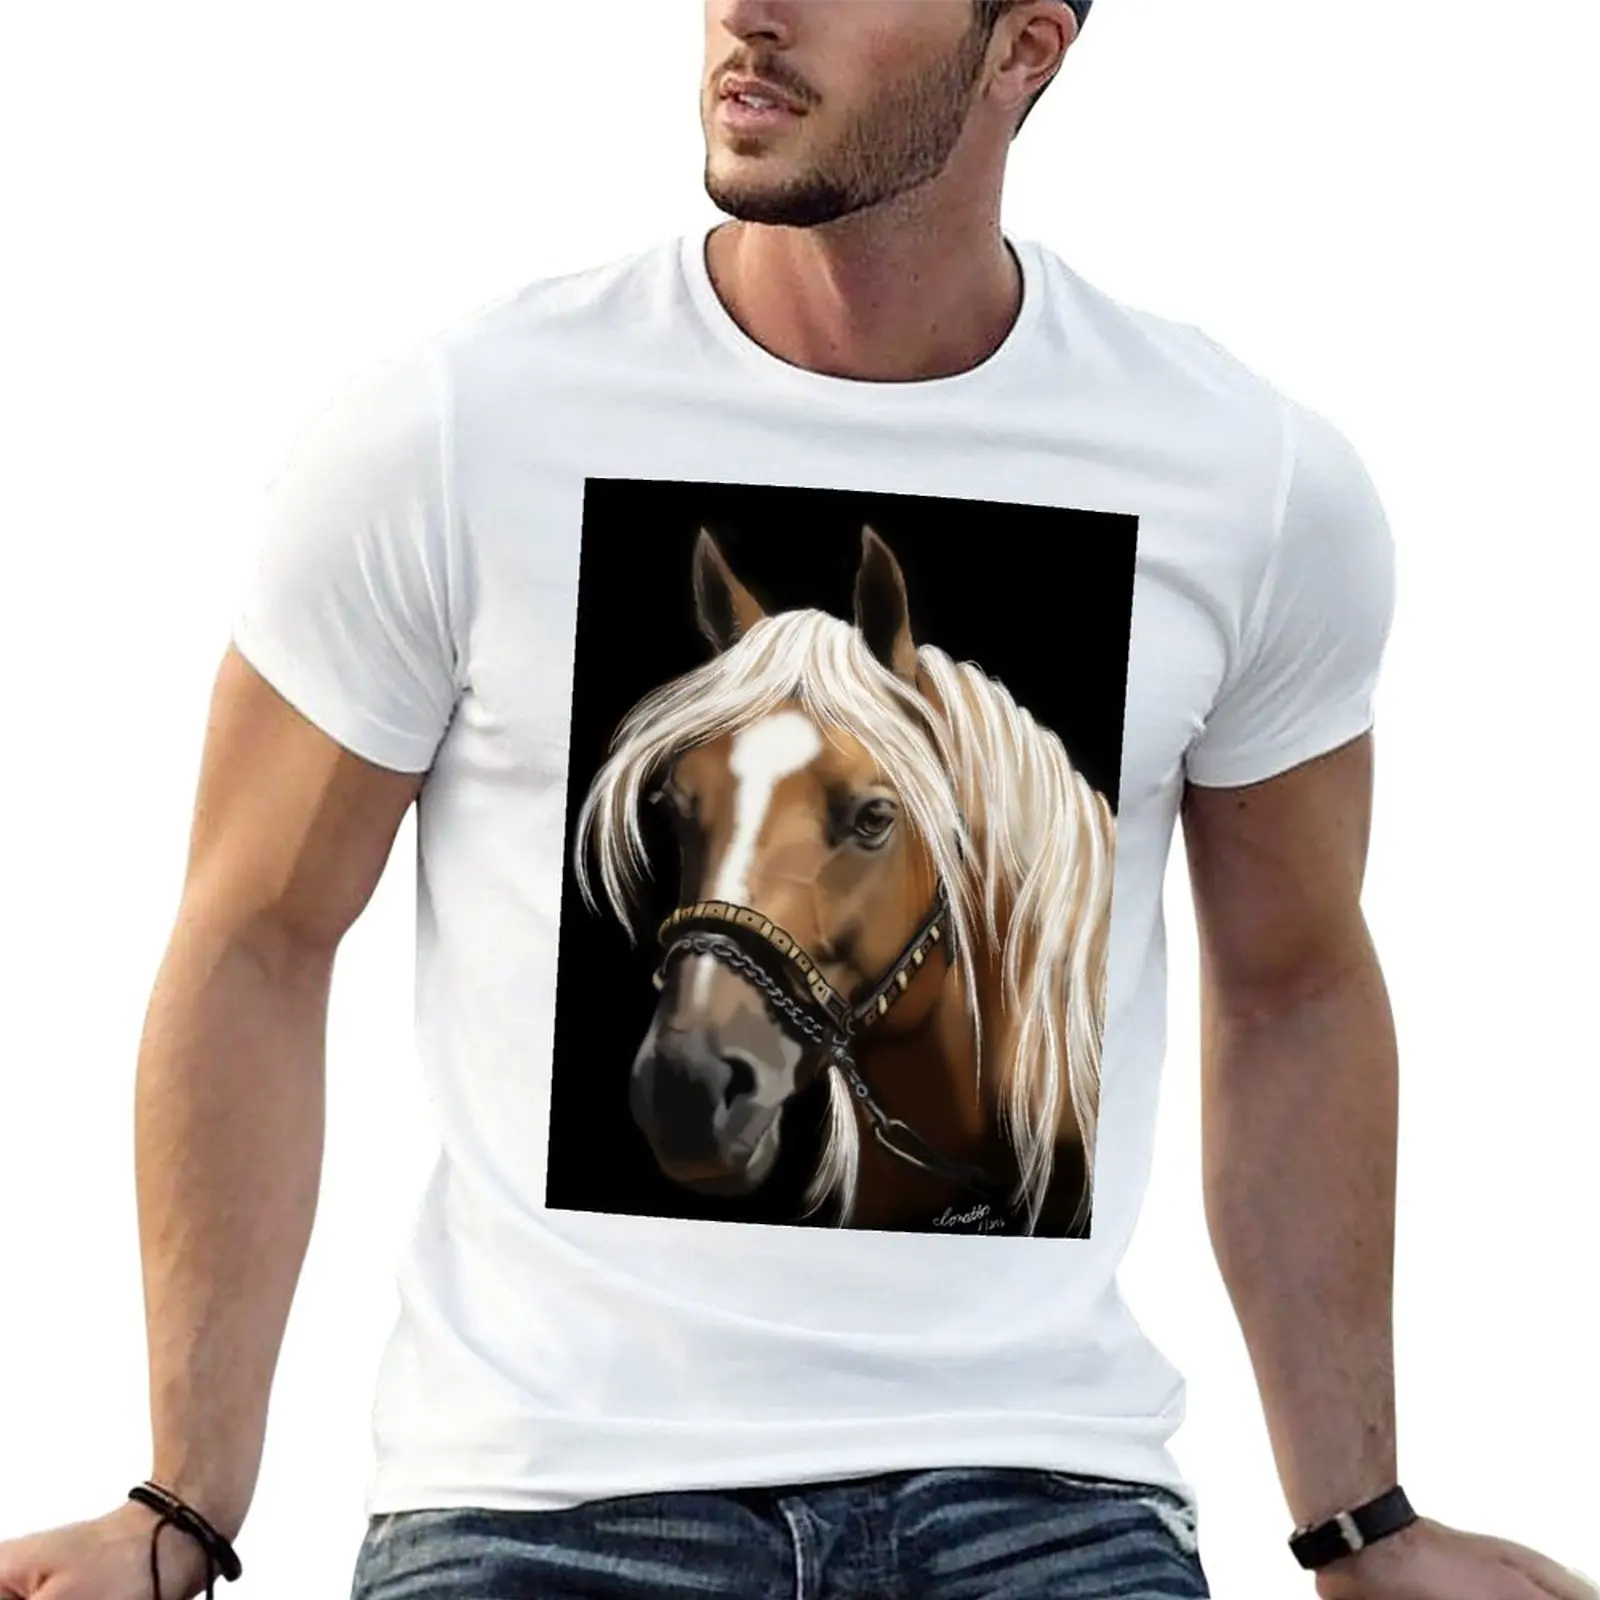 

The Palomino - Horse Portrait Painting T-Shirt black t shirt sweat shirts Short sleeve plus size tops clothes for men